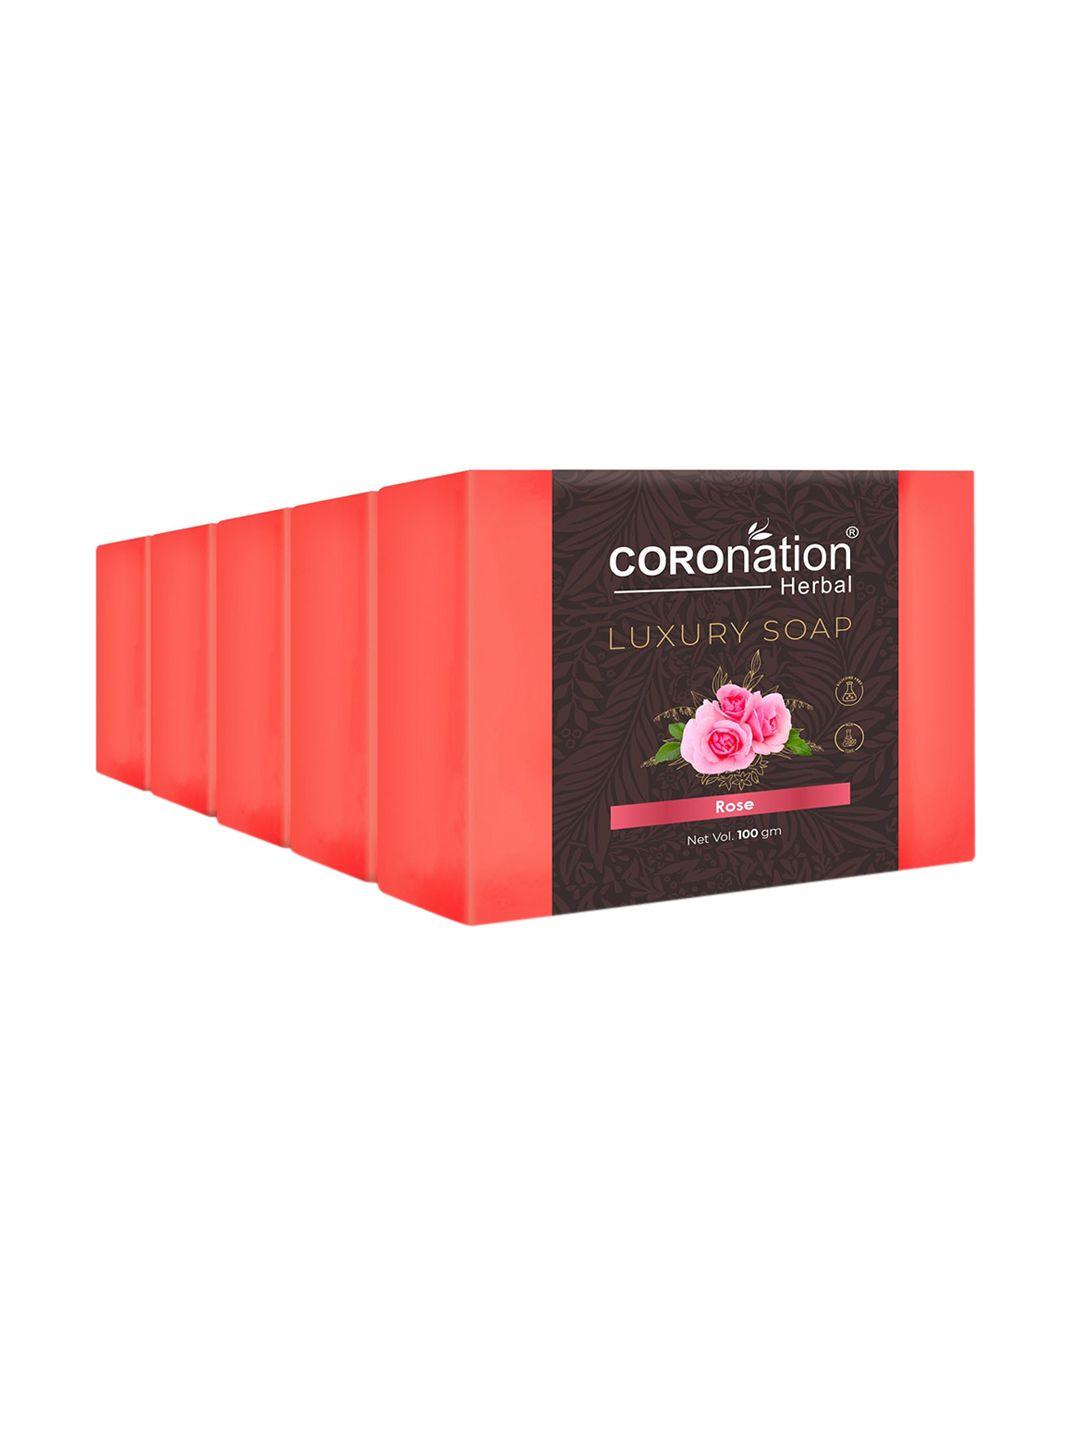 coronation herbal set of 5 rose luxury soaps - 100g each